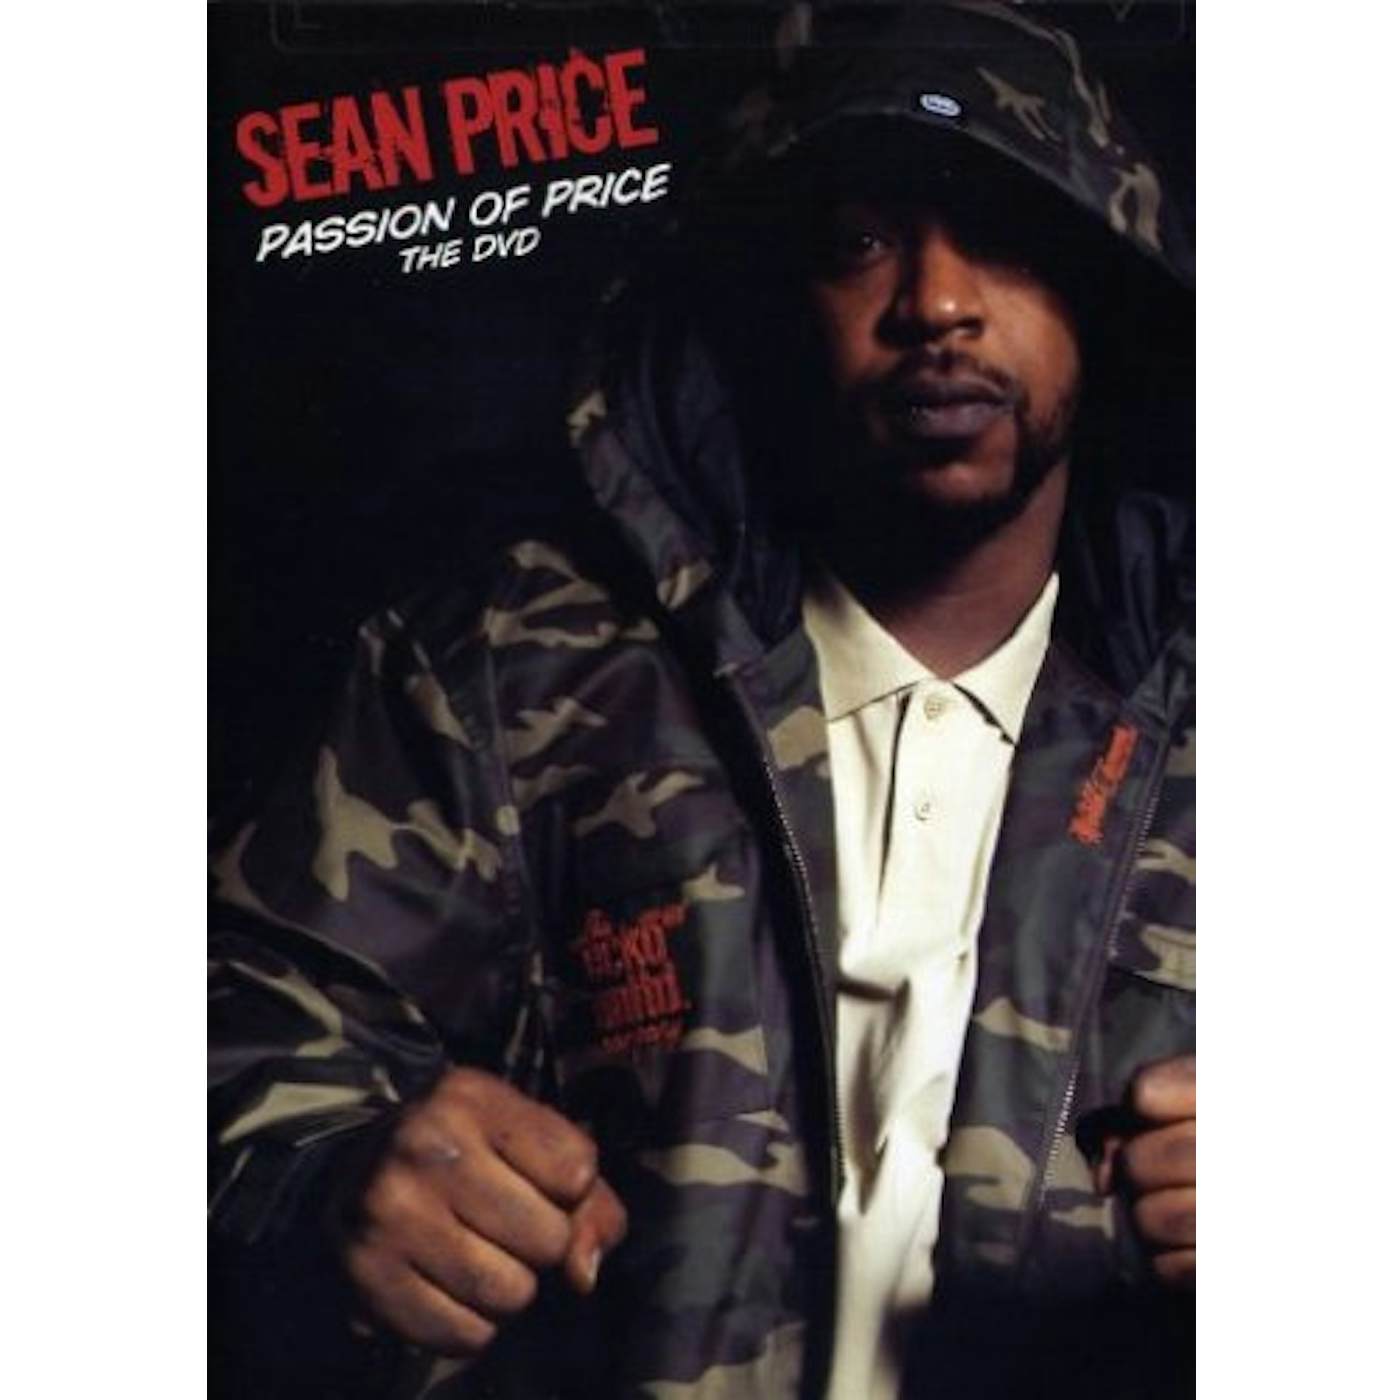 Sean Price PASSION OF PRICE DVD